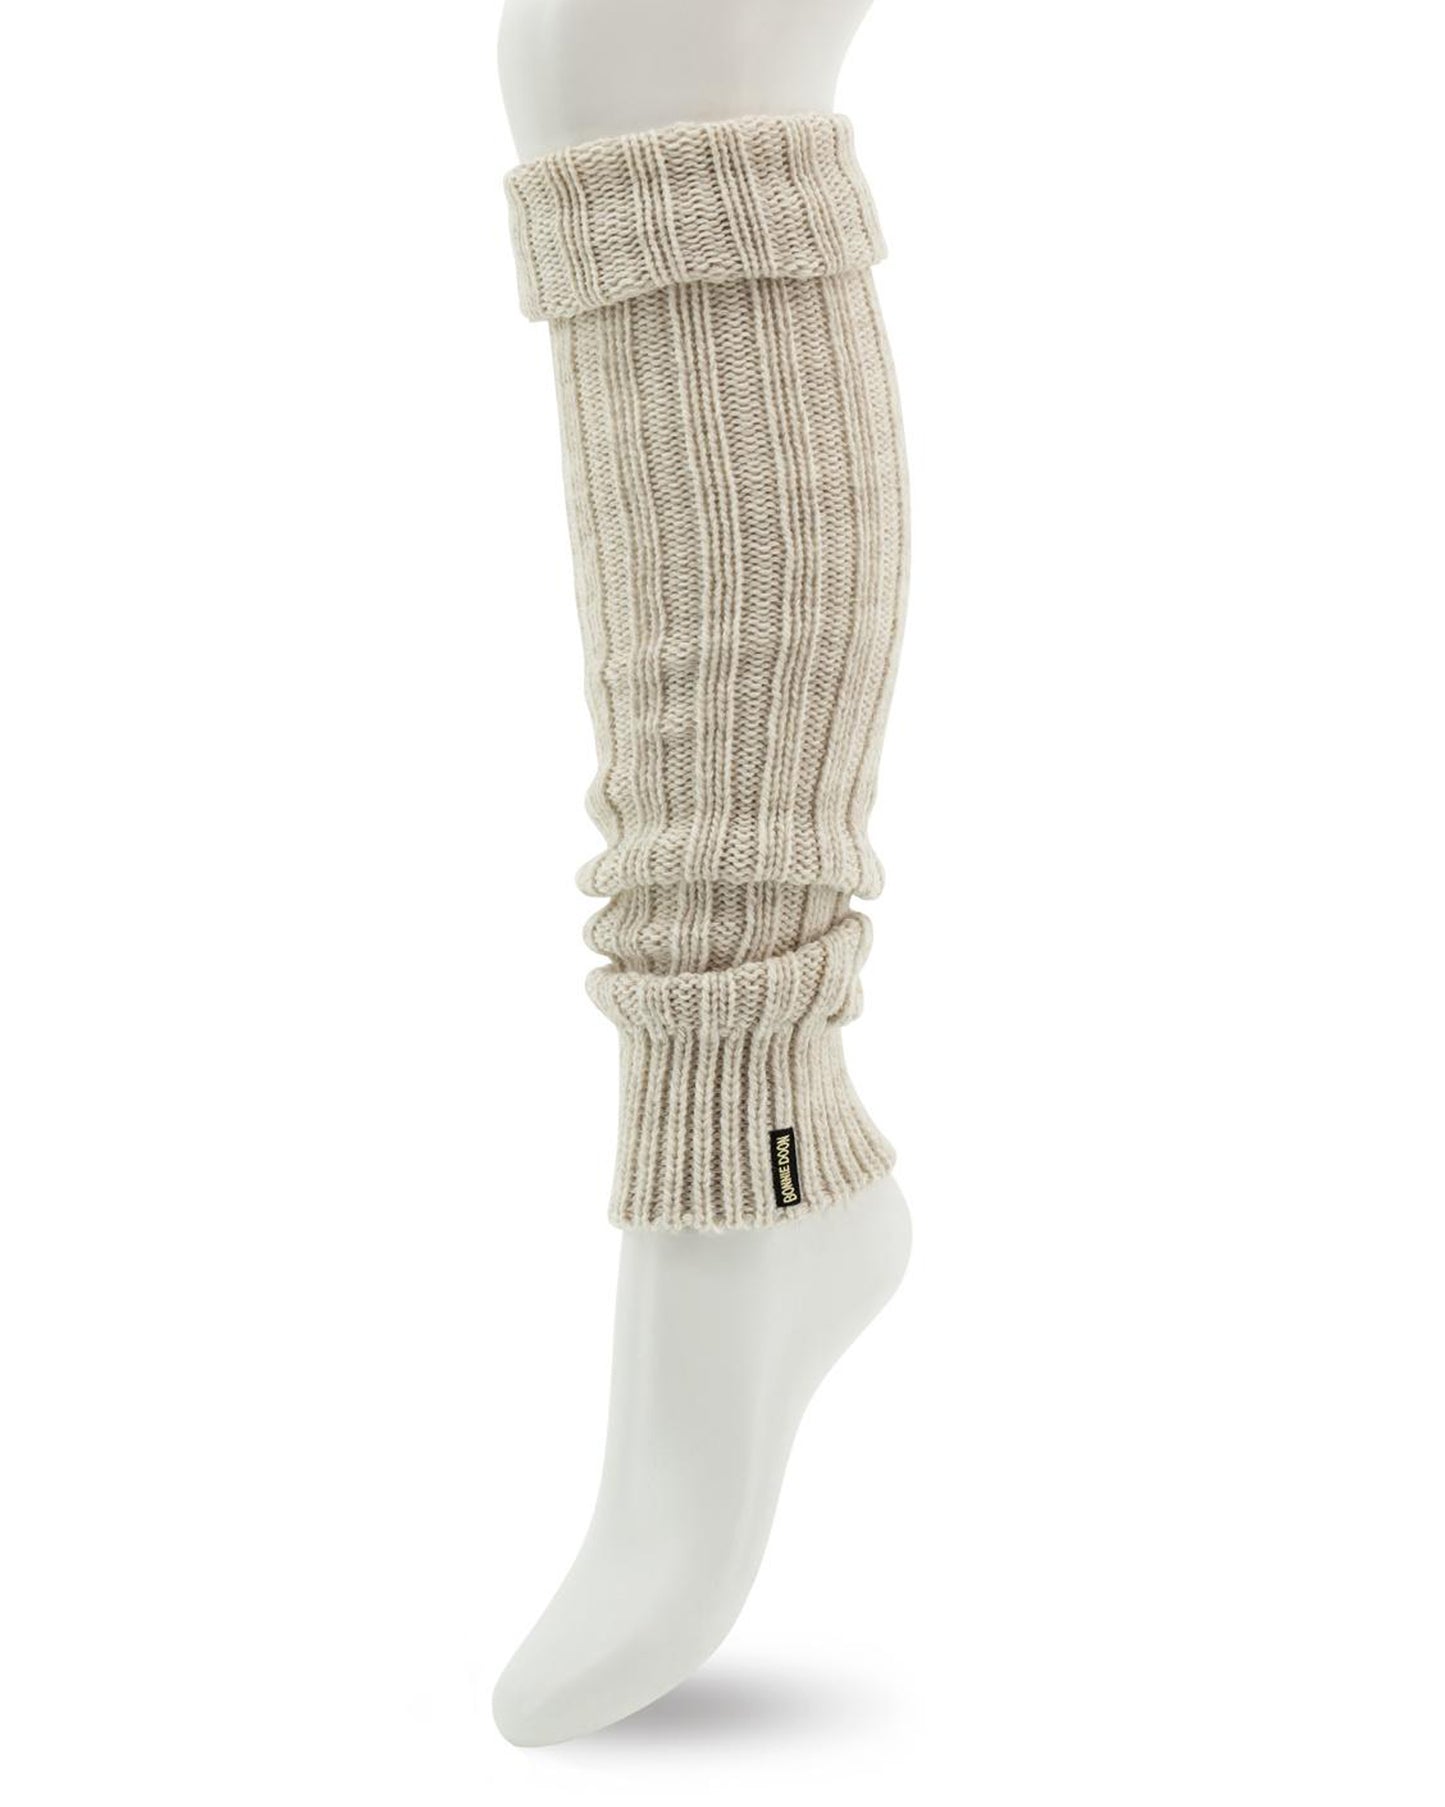 Bonnie Doon Sleever/Legwarmer BE021766 - ecru heather beige colour wool mix chunky knitted leg warmers